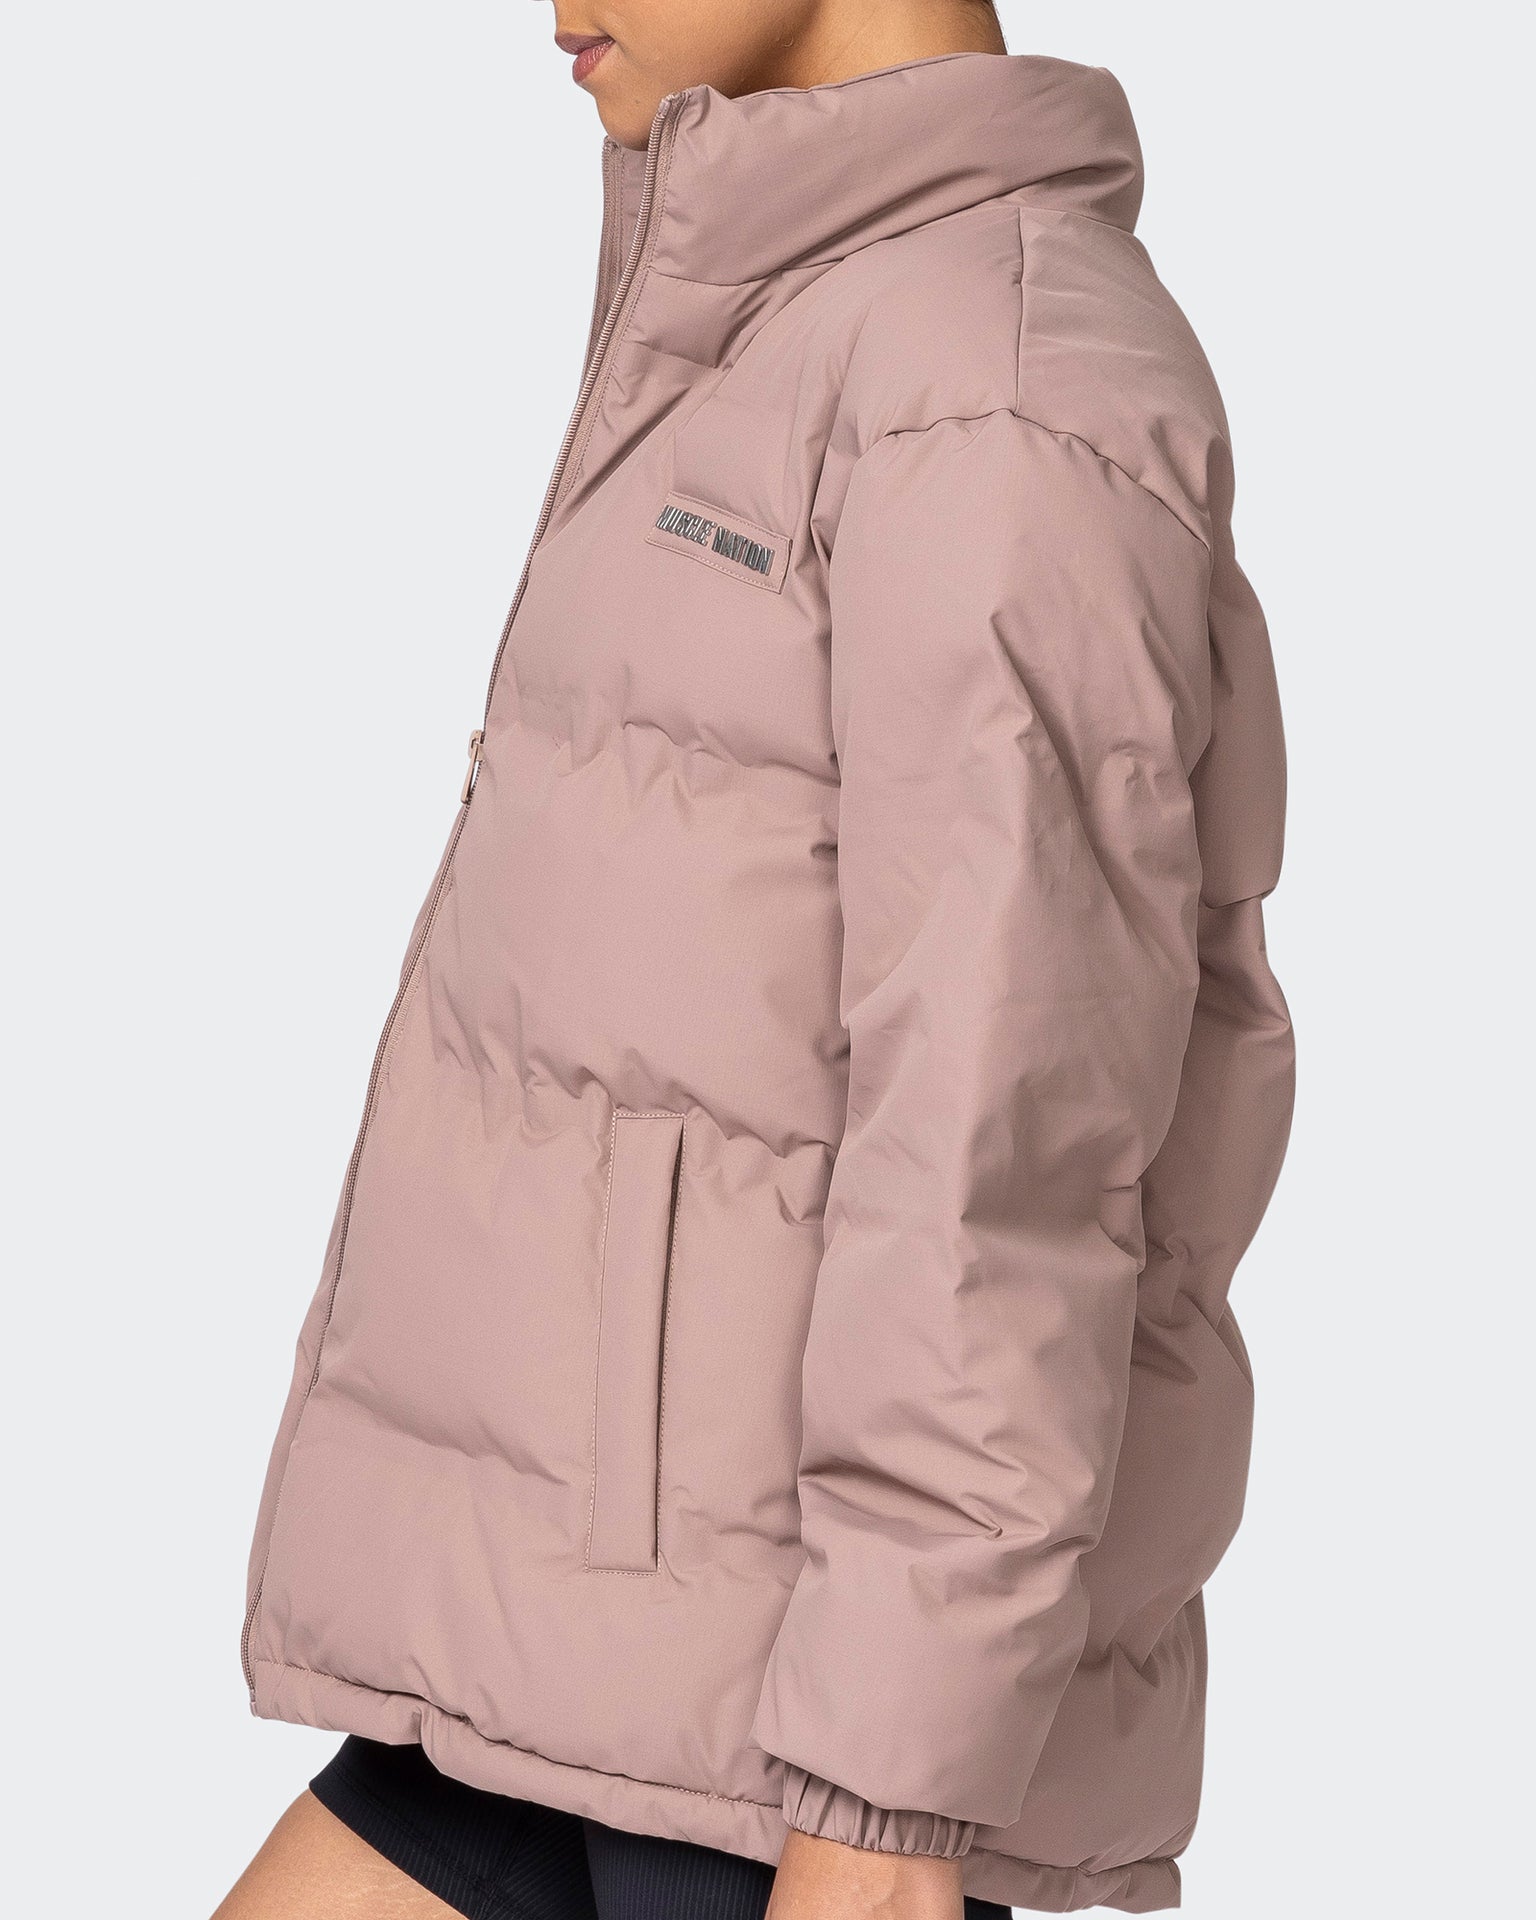 musclenation Jacket Womens Staple Oversized Puffer Jacket - Praline